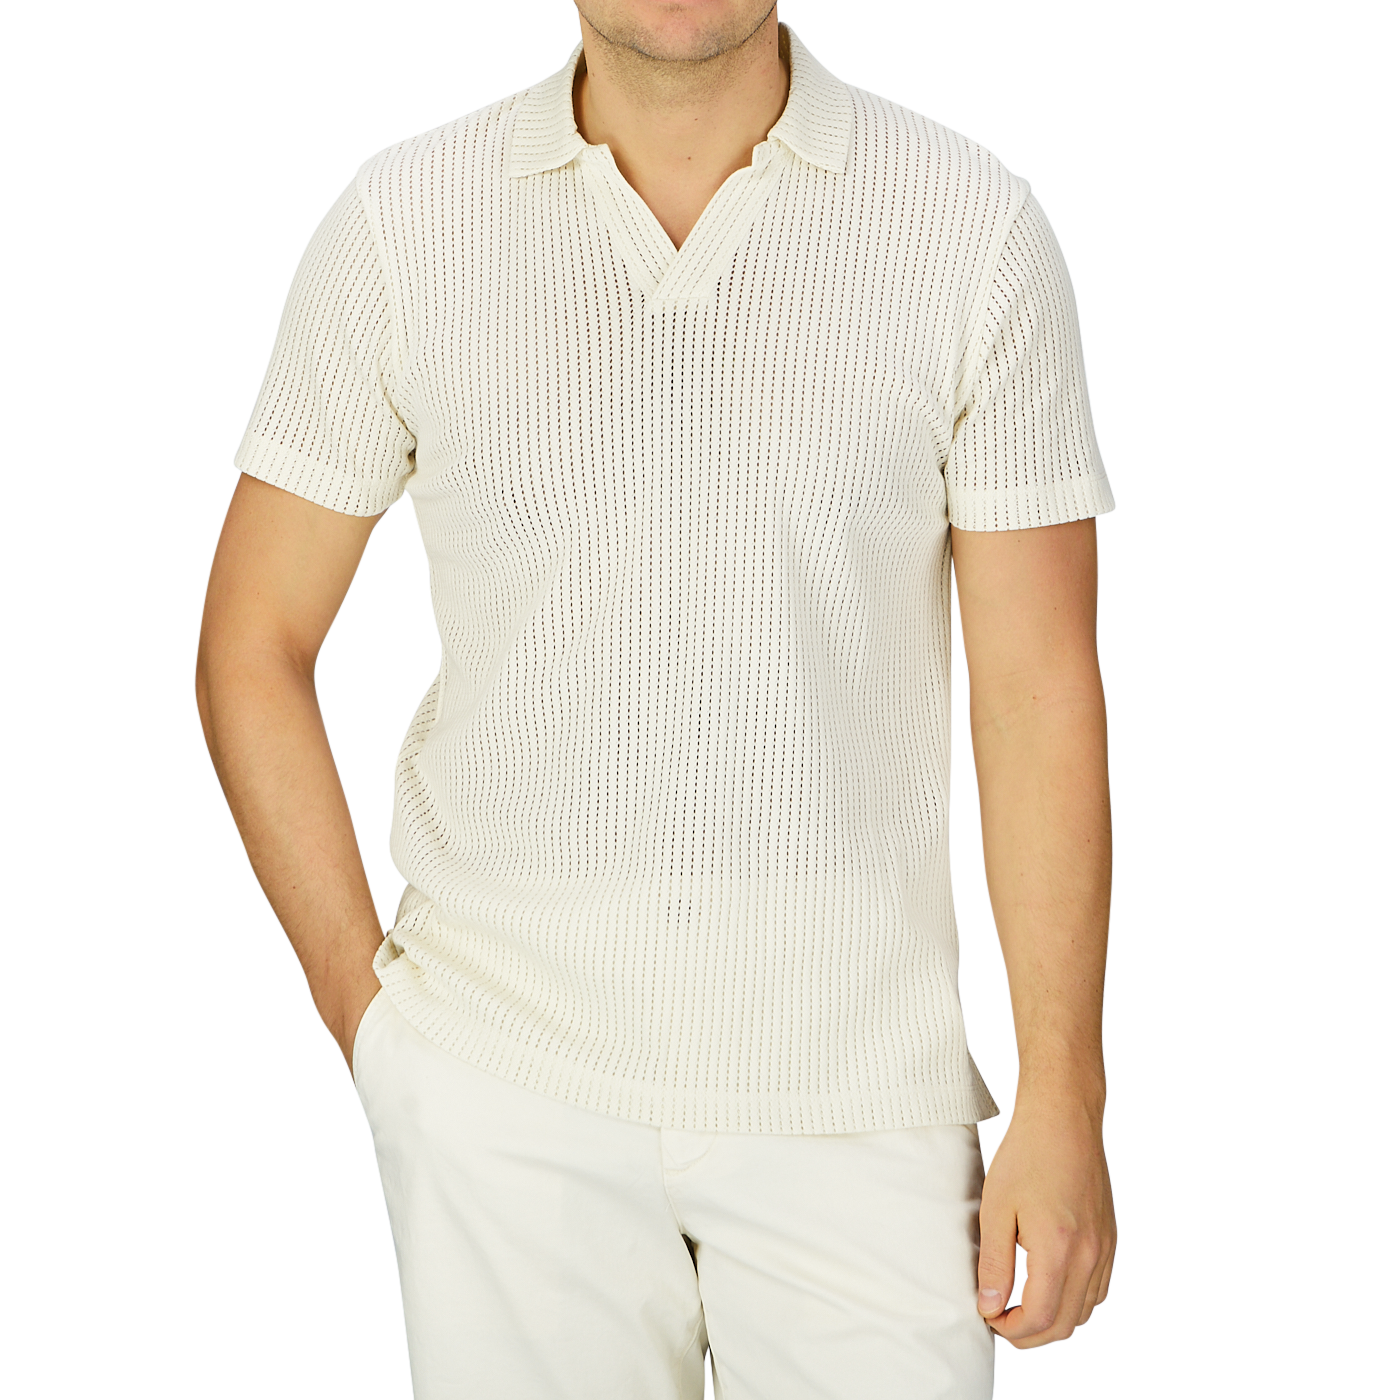 A man wearing a Sunspel Ecru White Linear Cotton Mesh Polo Shirt made of Supima cotton and pants.